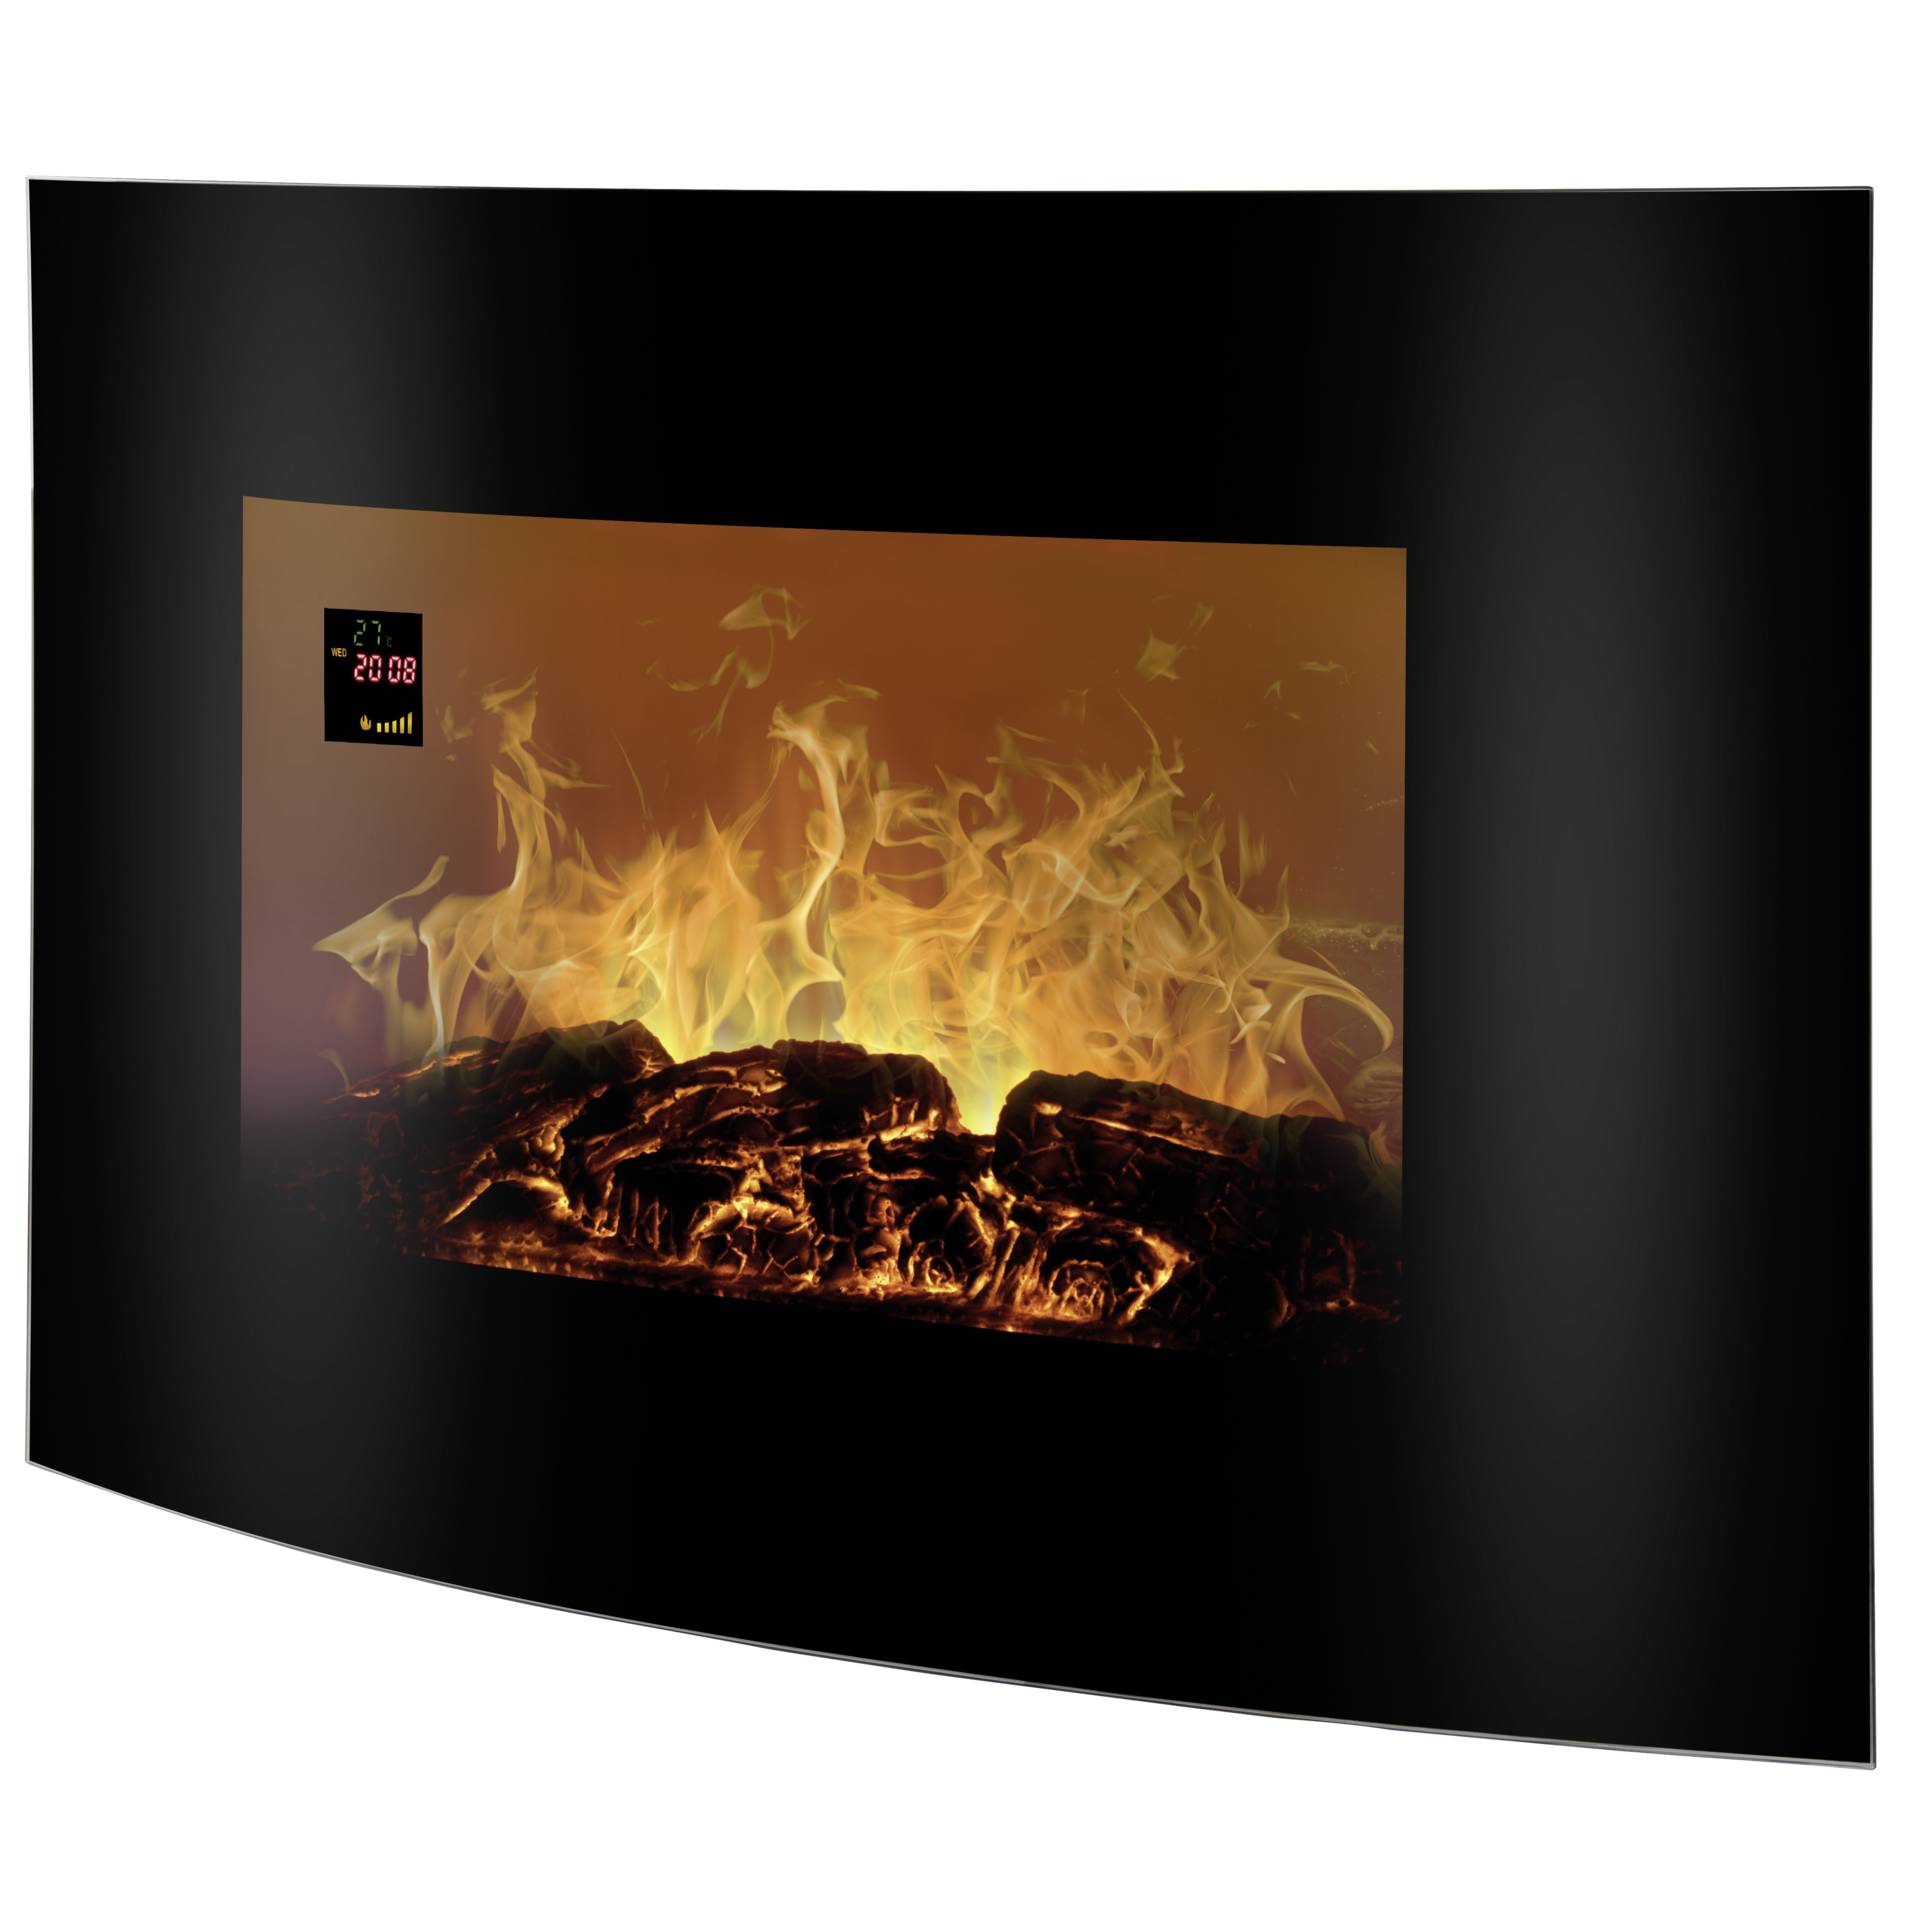 Portable Fireplace New Bomann Ek 6021 Cb Black Electric Fireplace Heater